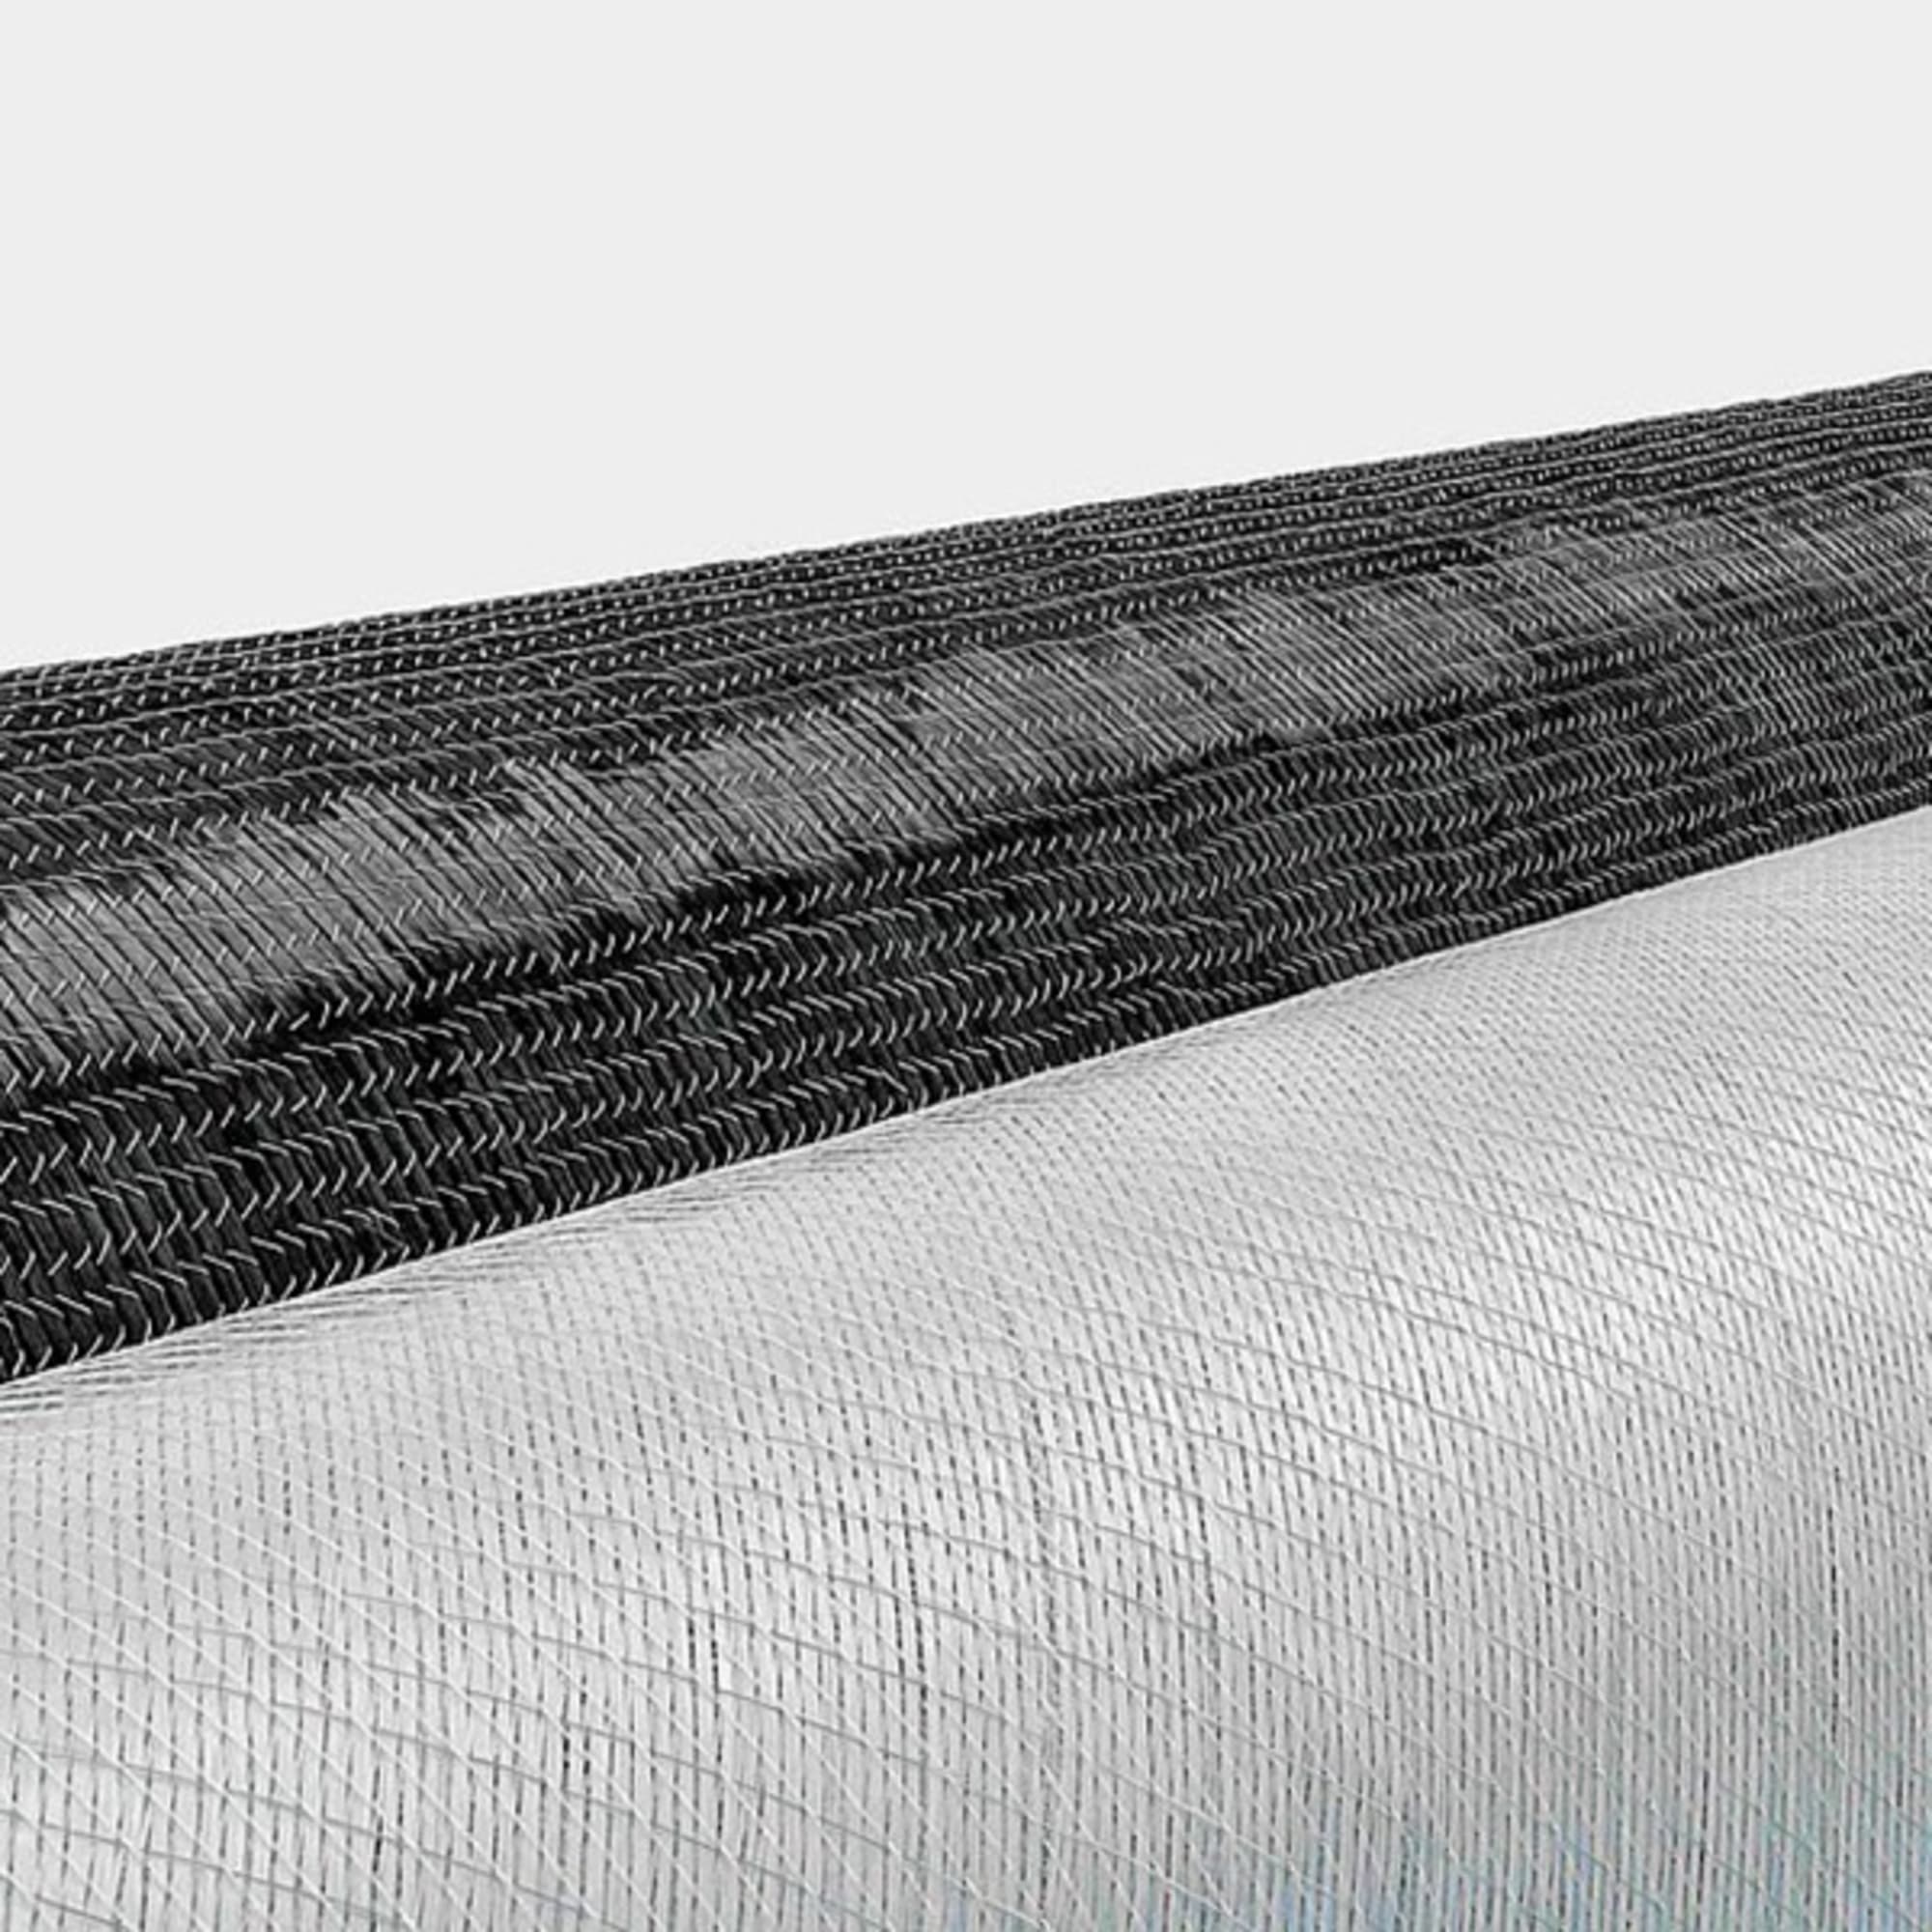 SIGRATEX® Carbon non-crimp fabric 610 g/m² (biaxial) 127 cm, image 5